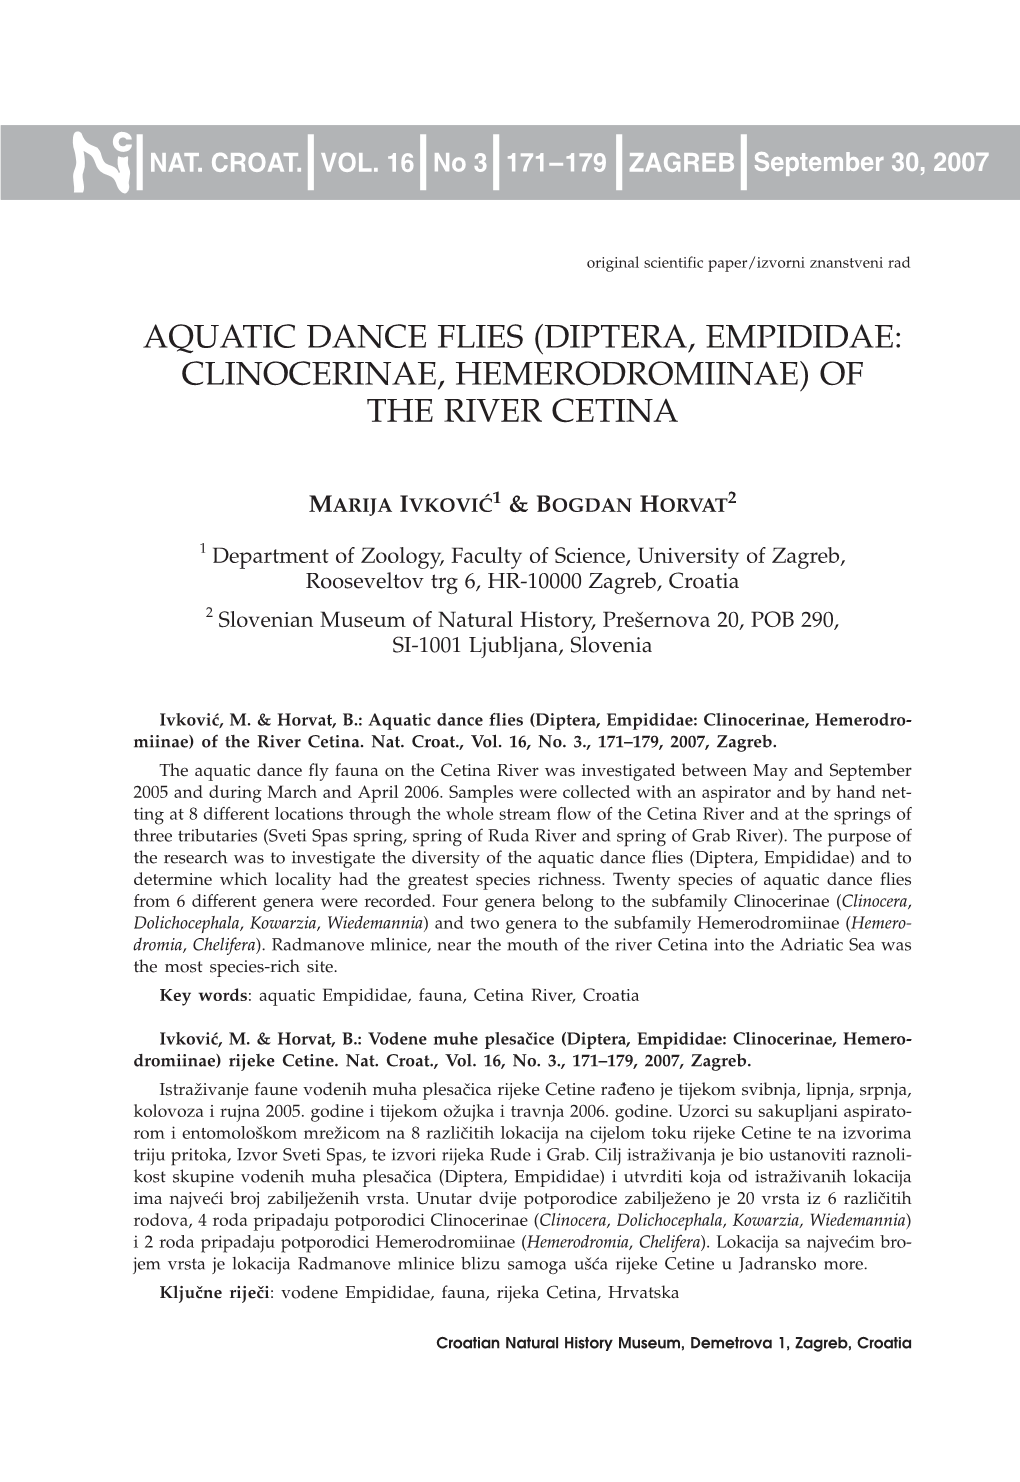 Aquatic Dance Flies (Diptera, Empididae: Clinocerinae, Hemerodromiinae) of the River Cetina